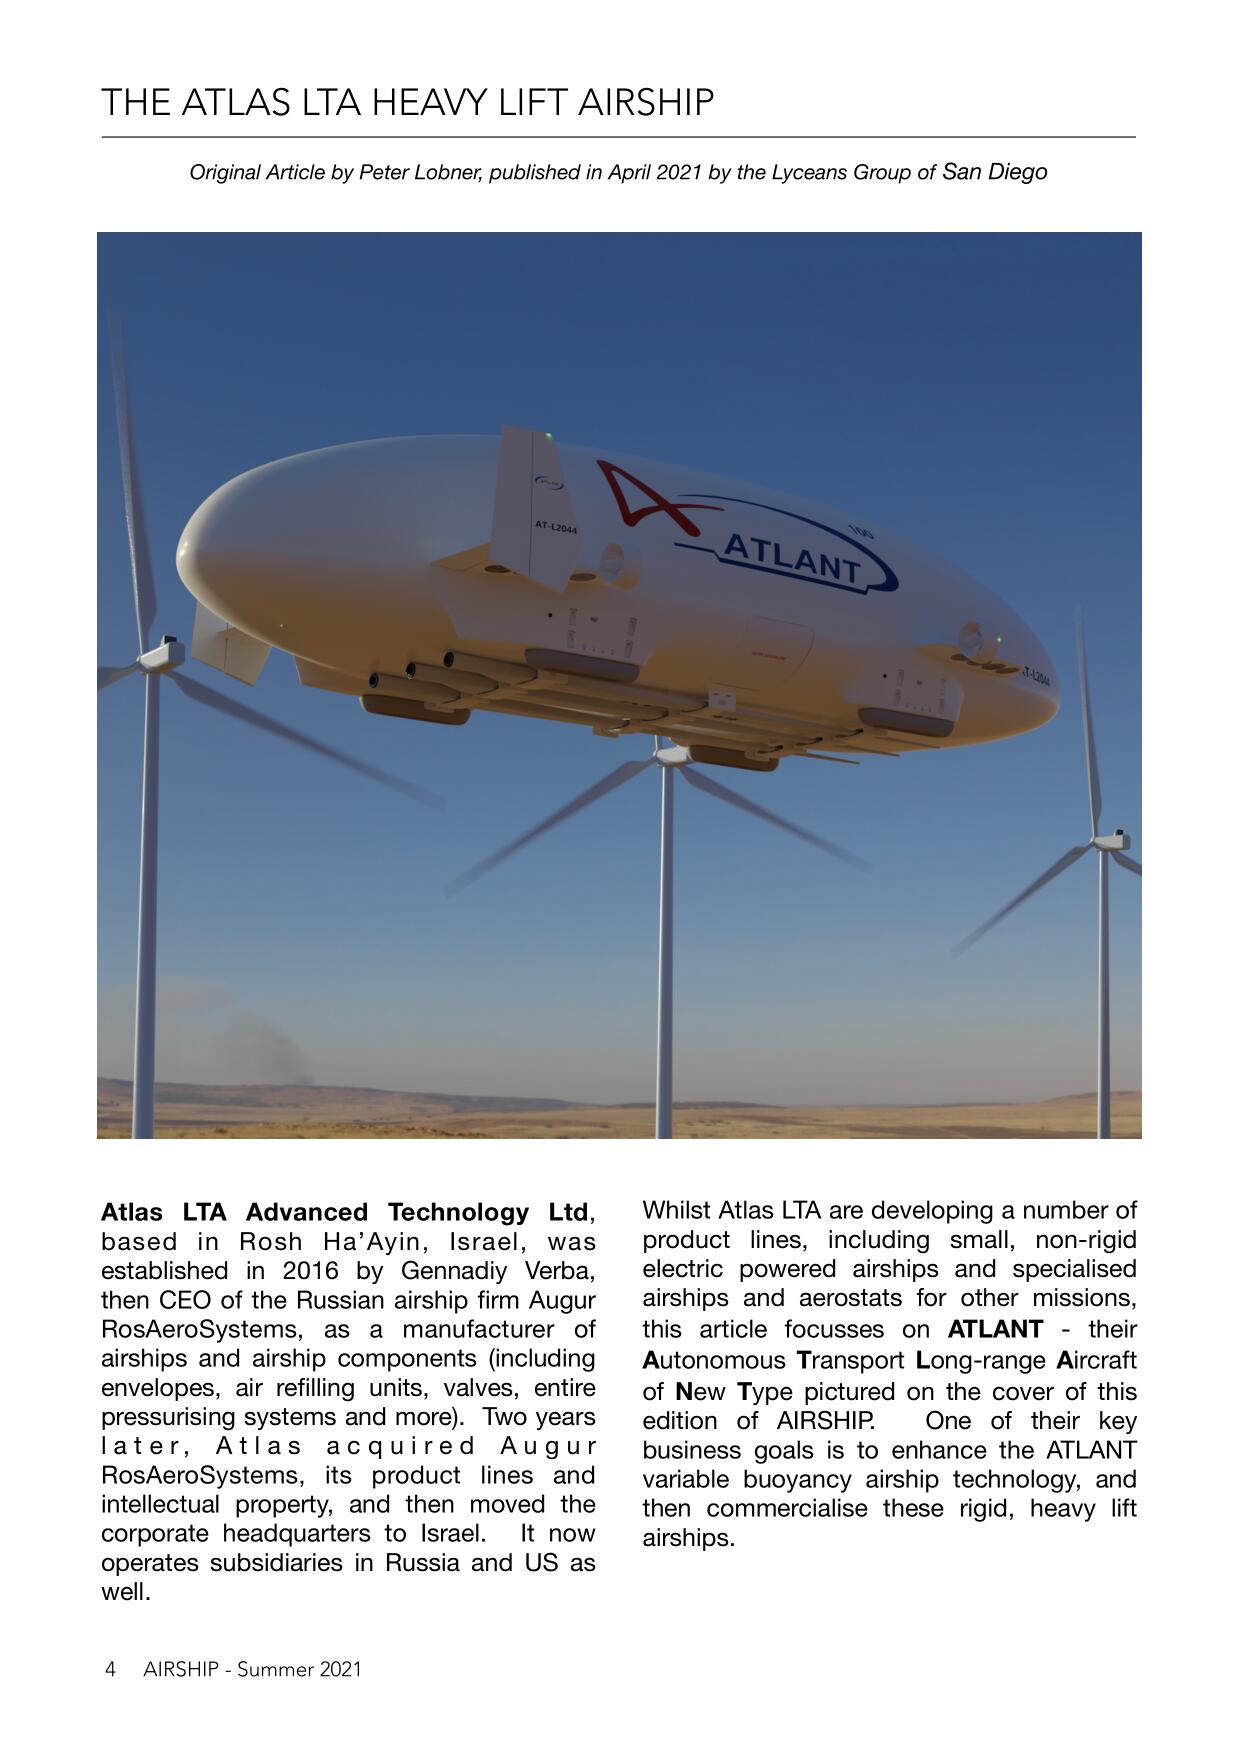 Atlas LTA in Airship Journal - Summer 2021